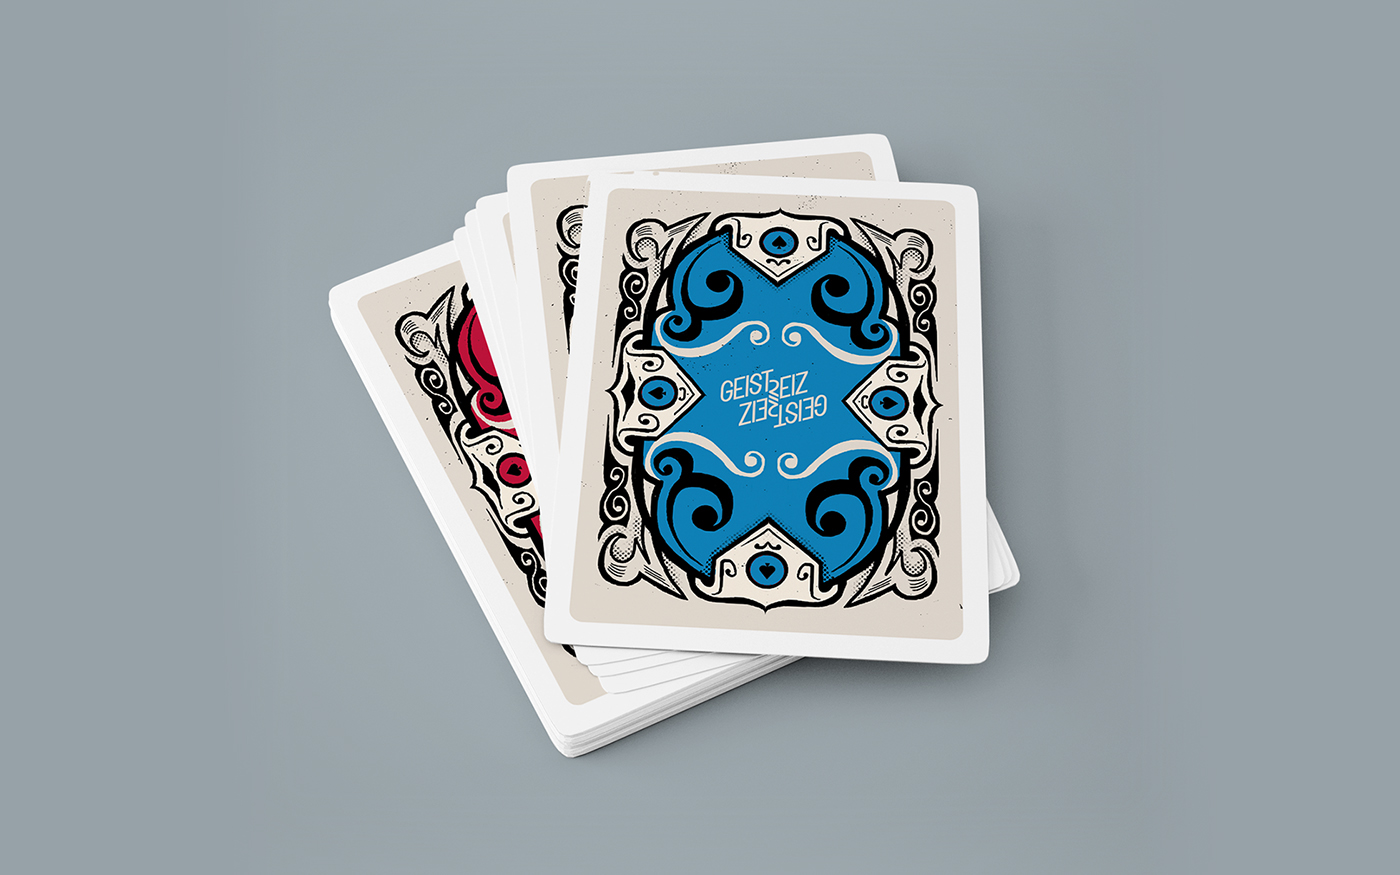 Playing Cards cards king queen jack ace game Poker spade heart cross diamonds playing gambling joker